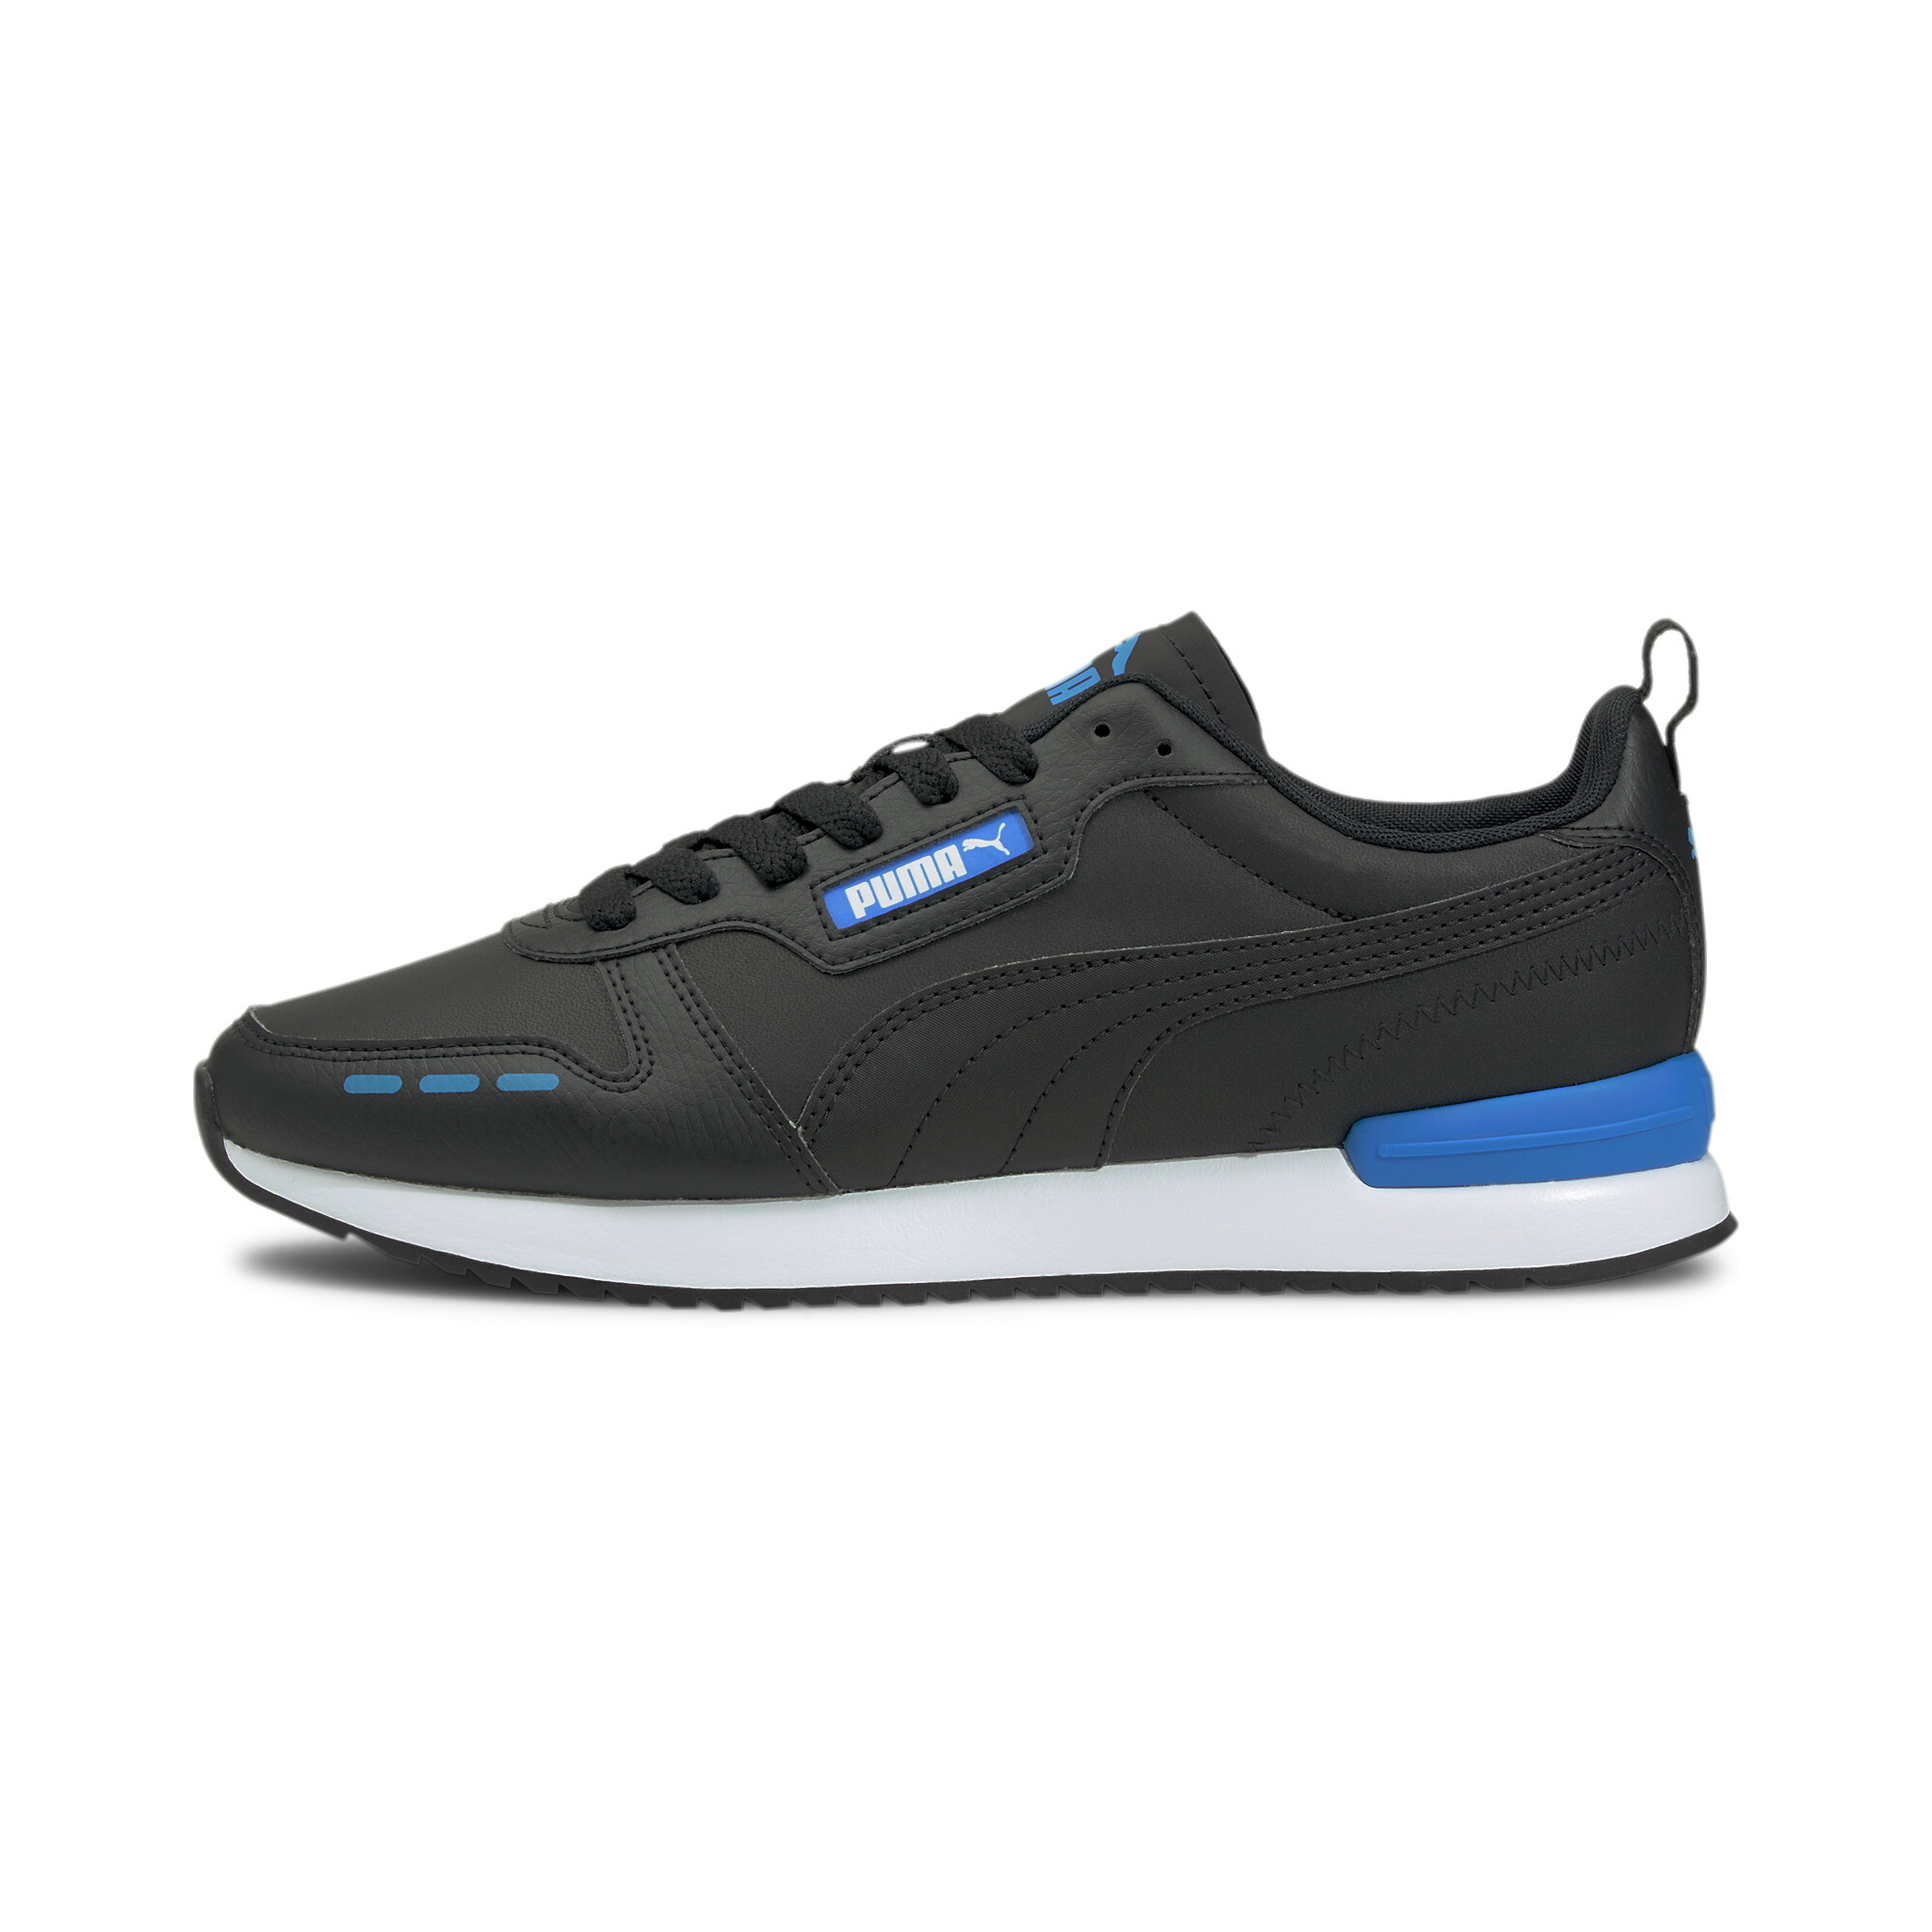 Indexbild 25 - PUMA R78 Sneaker Unisex Schuhe Basics Neu